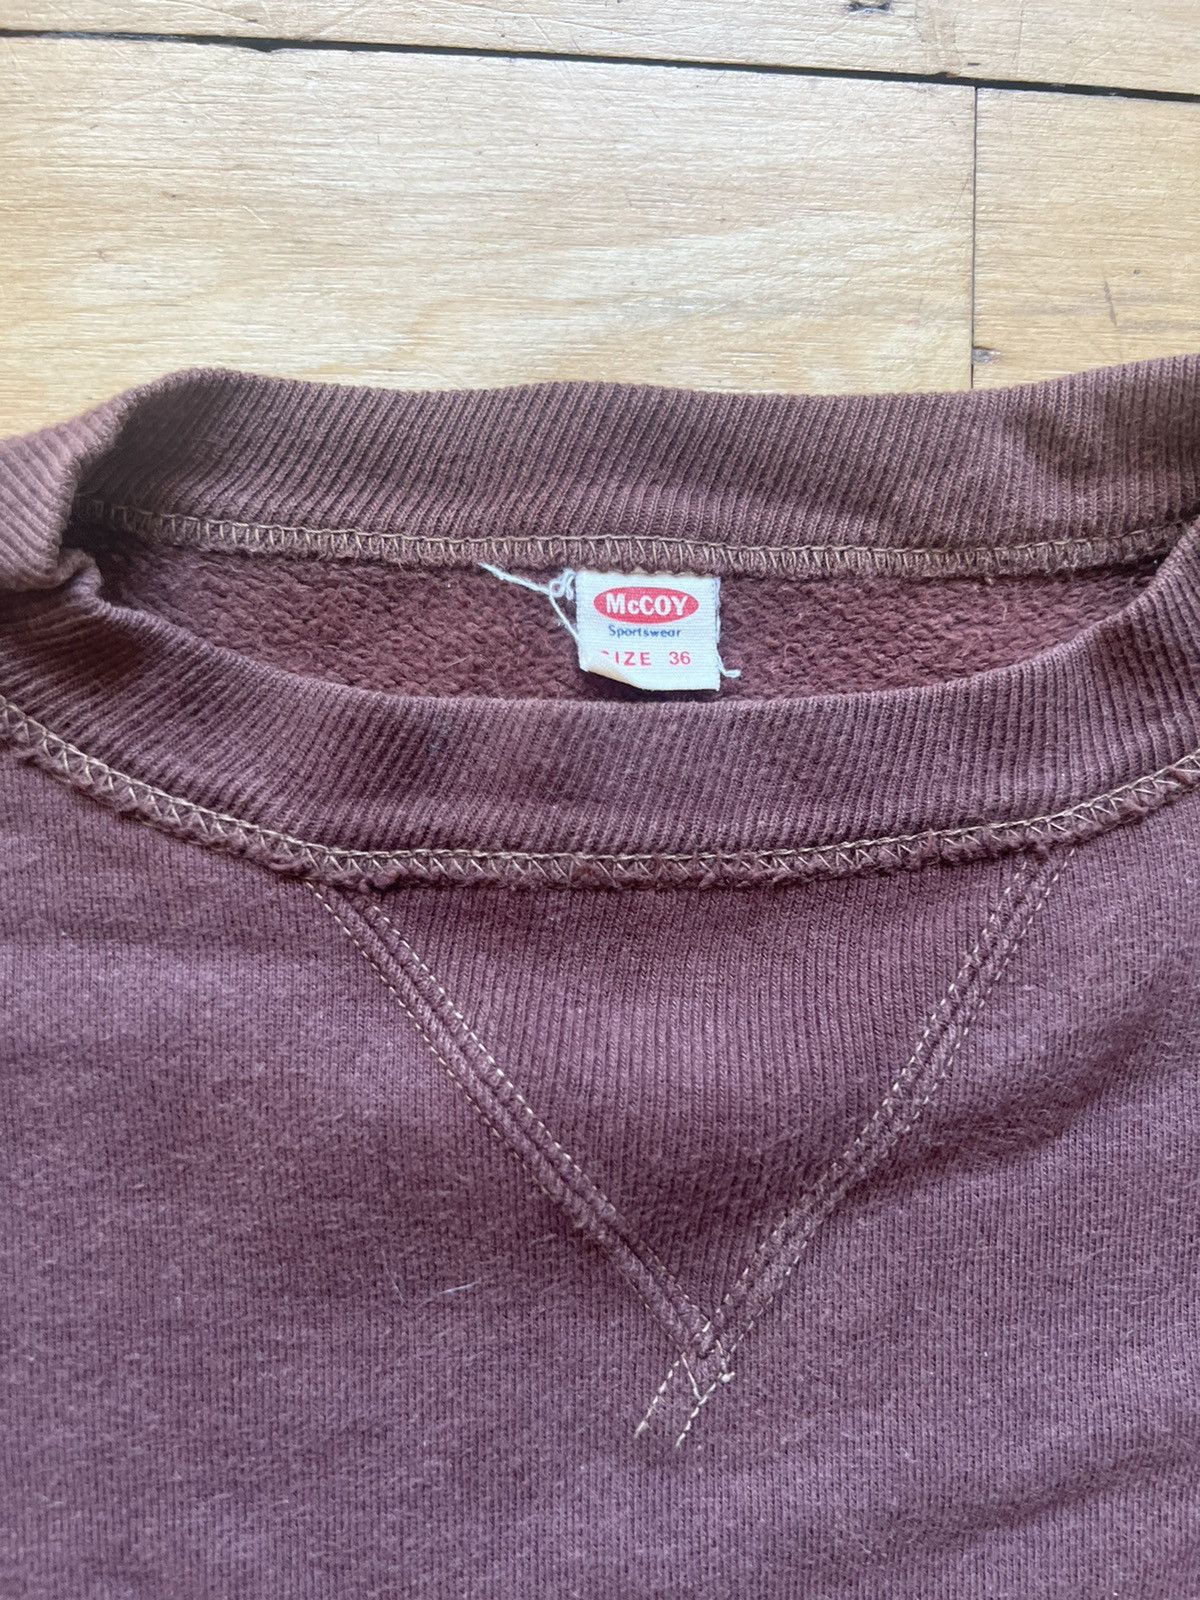 The Real McCoy's Crewneck Sweatshirt Size US S / EU 44-46 / 1 - 3 Preview